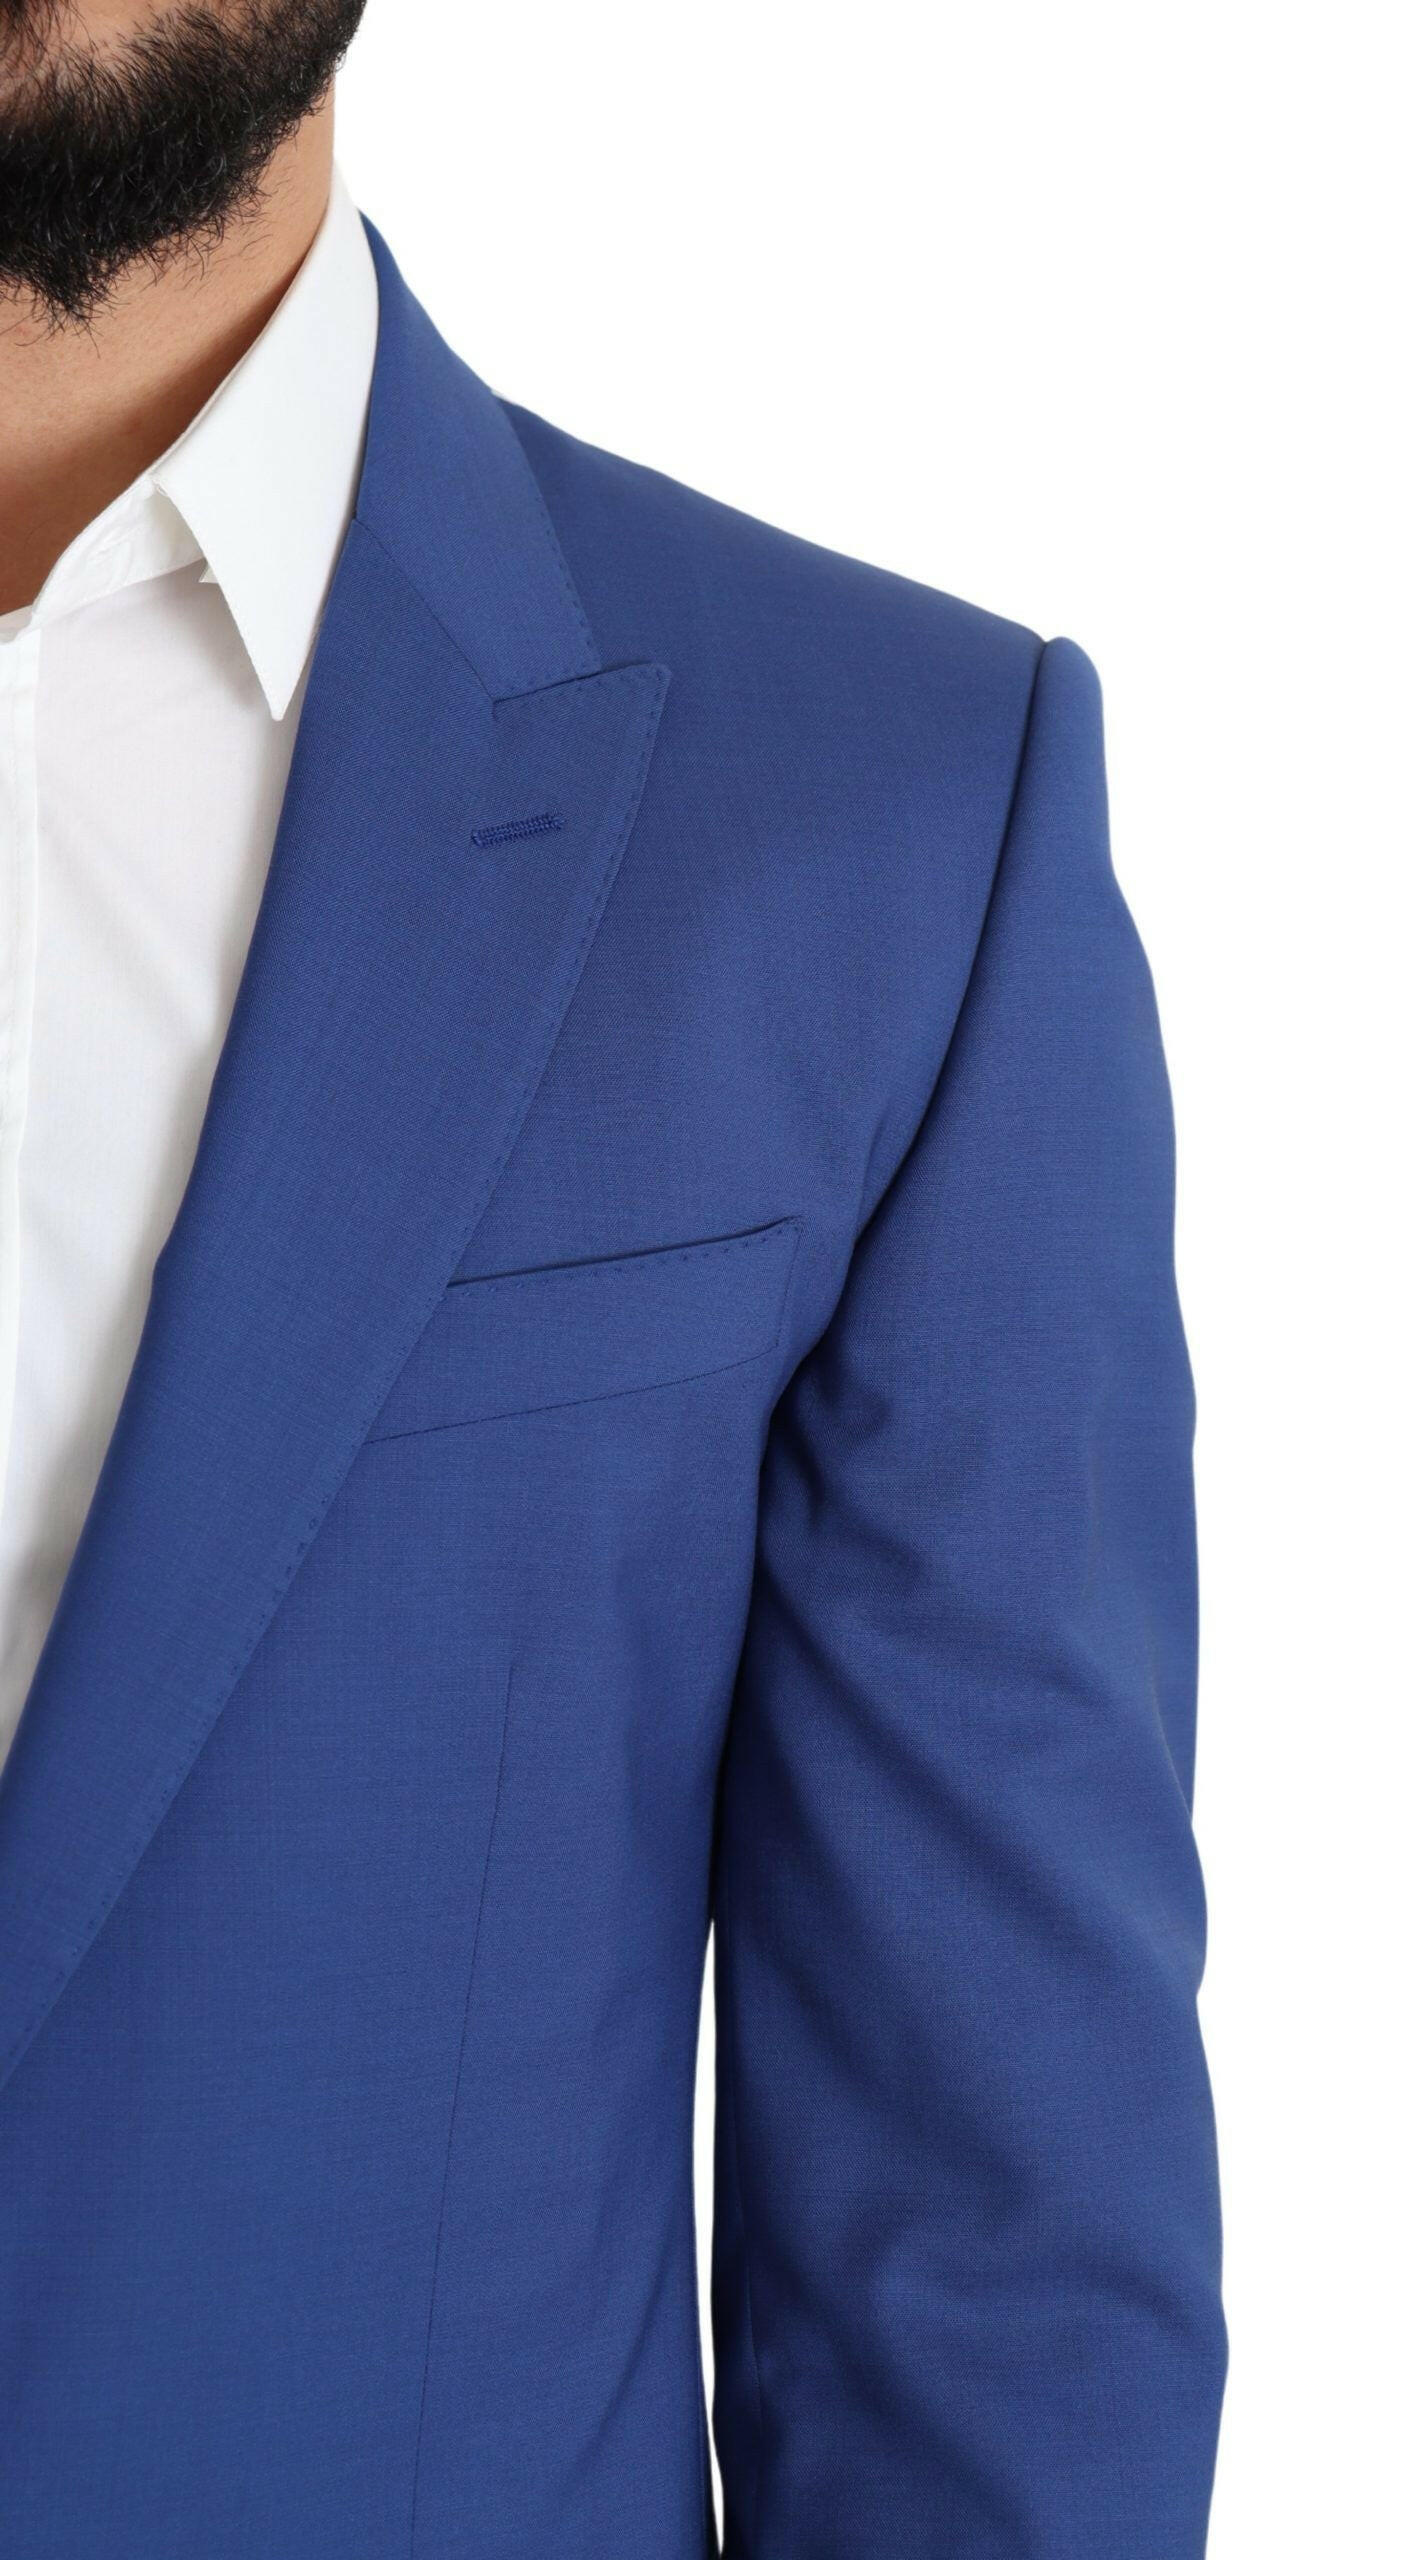 Dolce & Gabbana Blue Wool Single Breasted Coat MARTINI Blazer - GENUINE AUTHENTIC BRAND LLC  